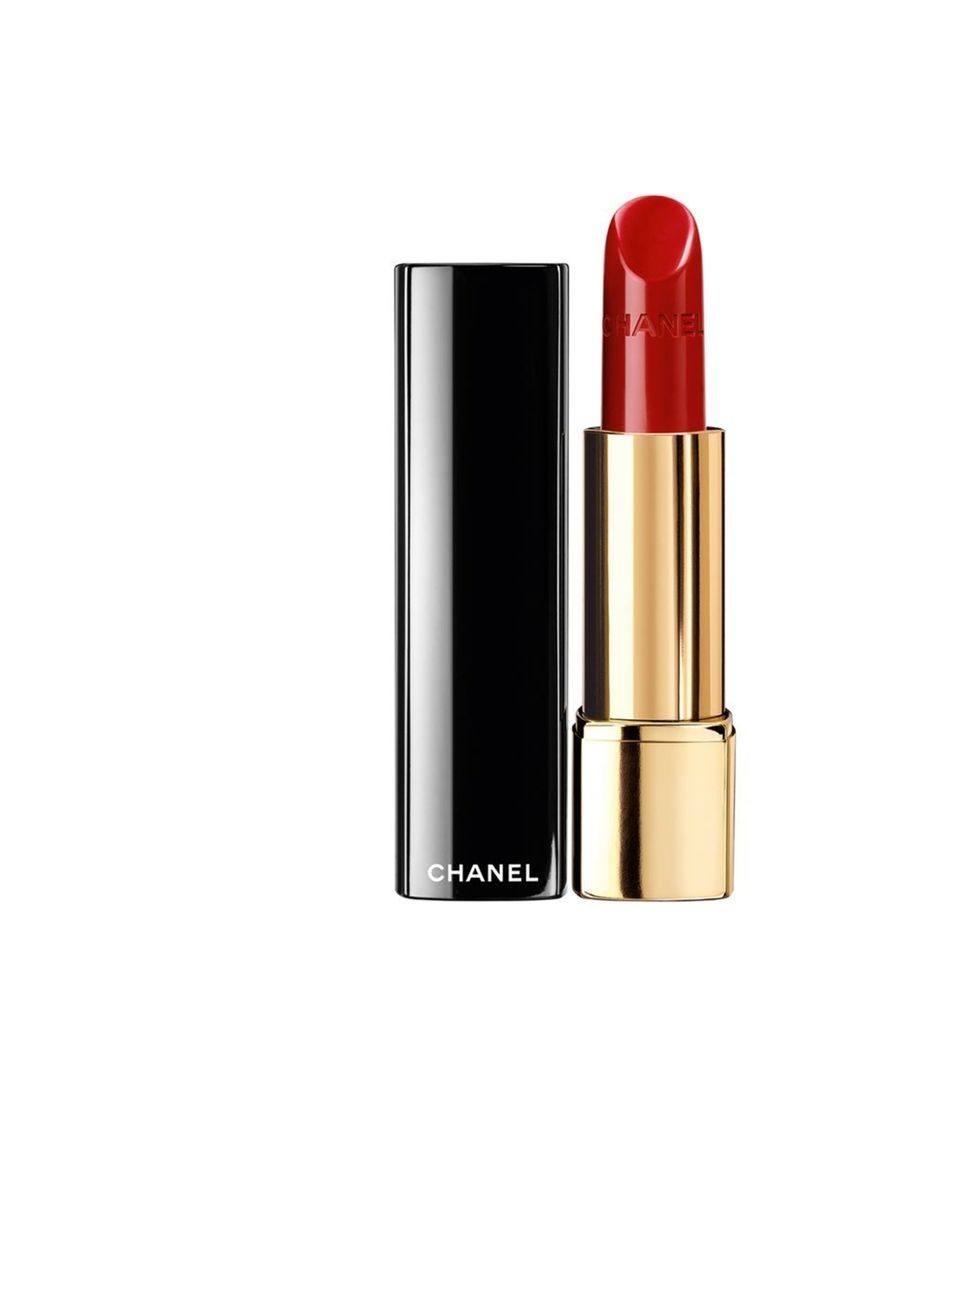 <p>Chanel Rouge Allure in Passion, £25 at www.debenhams.com</p><p><a href="http://www.debenhams.com/webapp/wcs/stores/servlet/prod_10001_10001_123152104799_-1">BUY NOW</a> </p>